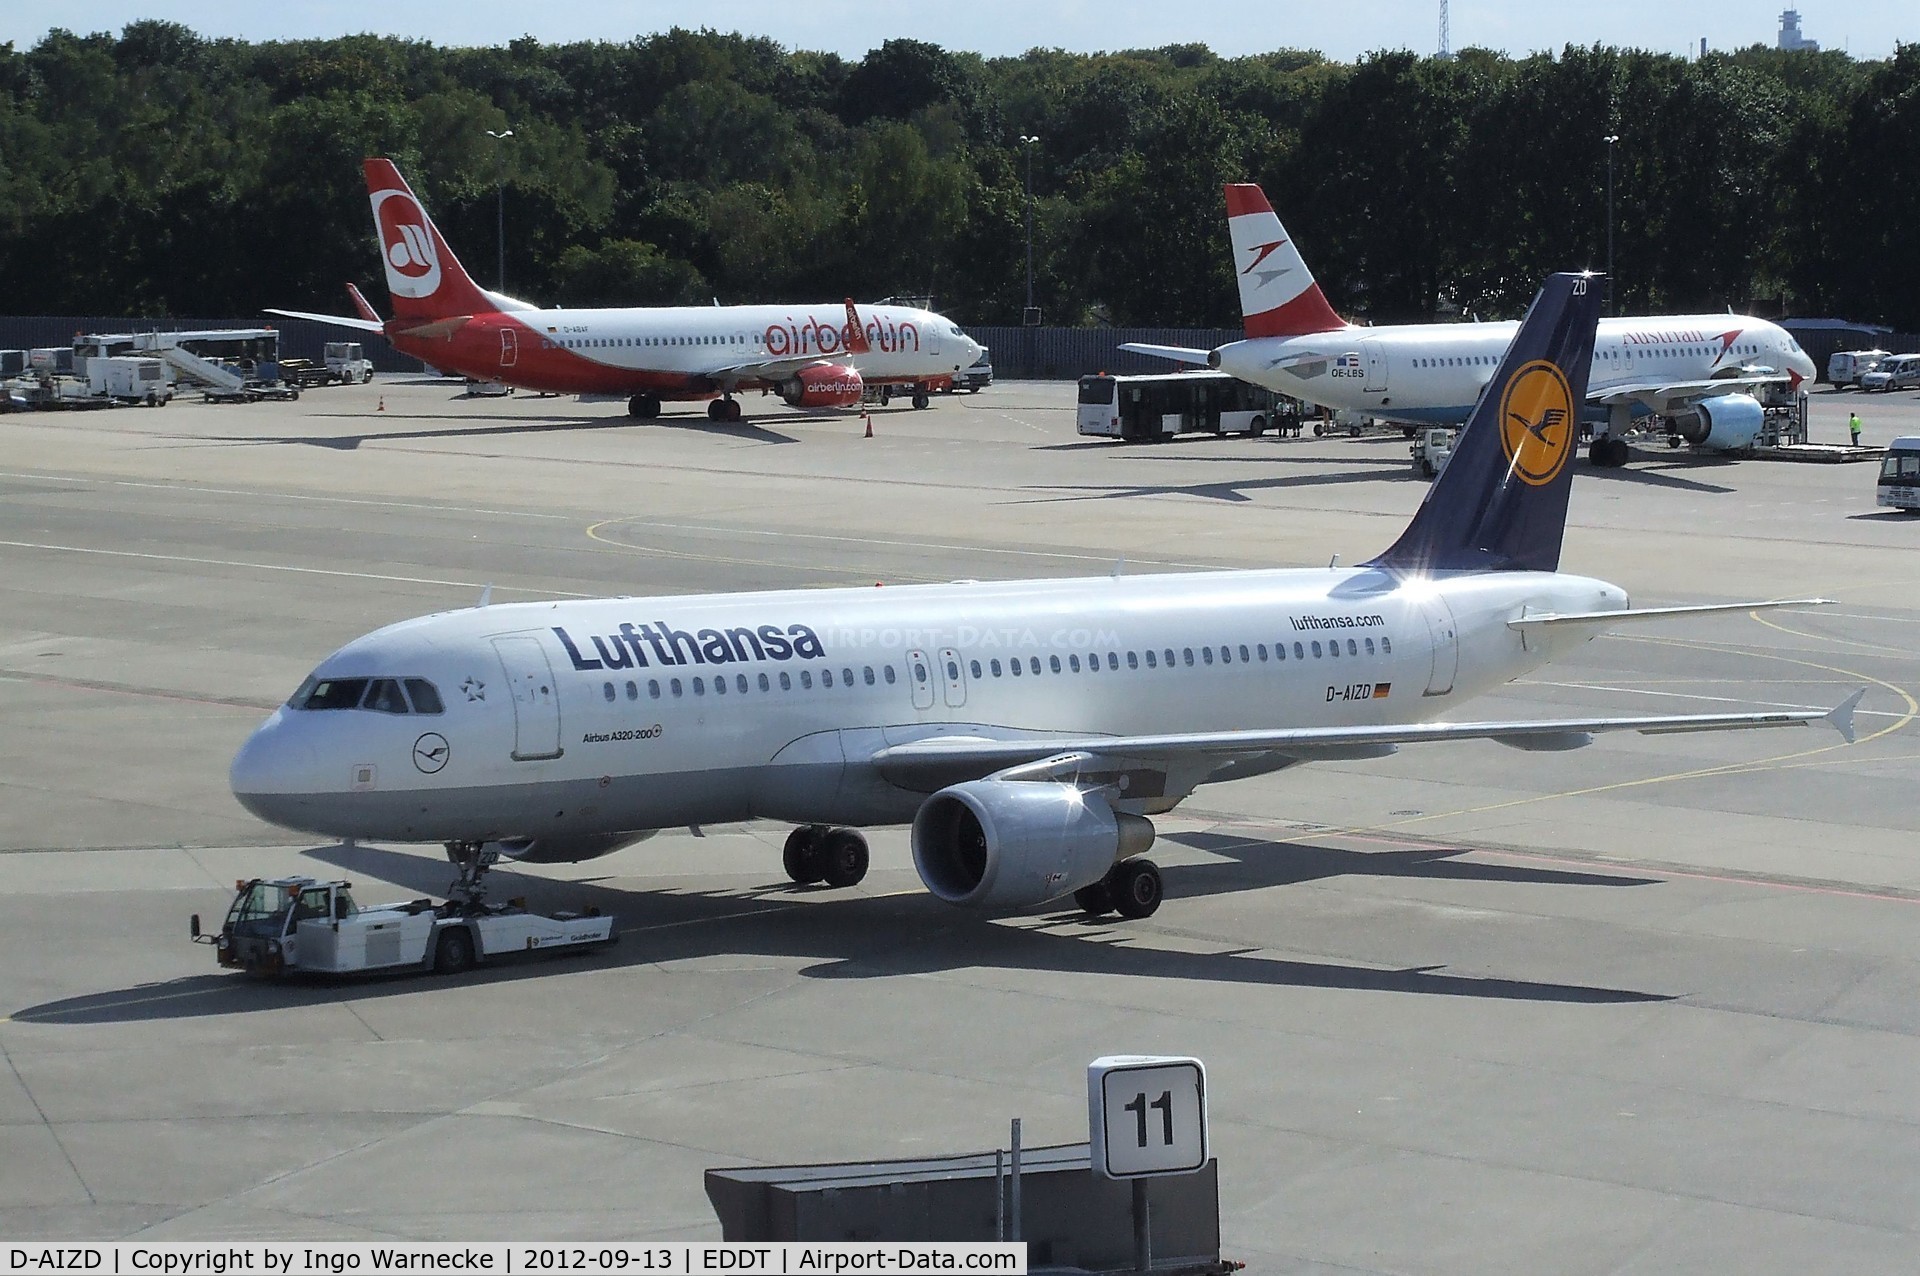 D-AIZD, 2010 Airbus A320-214 C/N 4191, Airbus A320-214 of Lufthansa at Berlin-Tegel airport